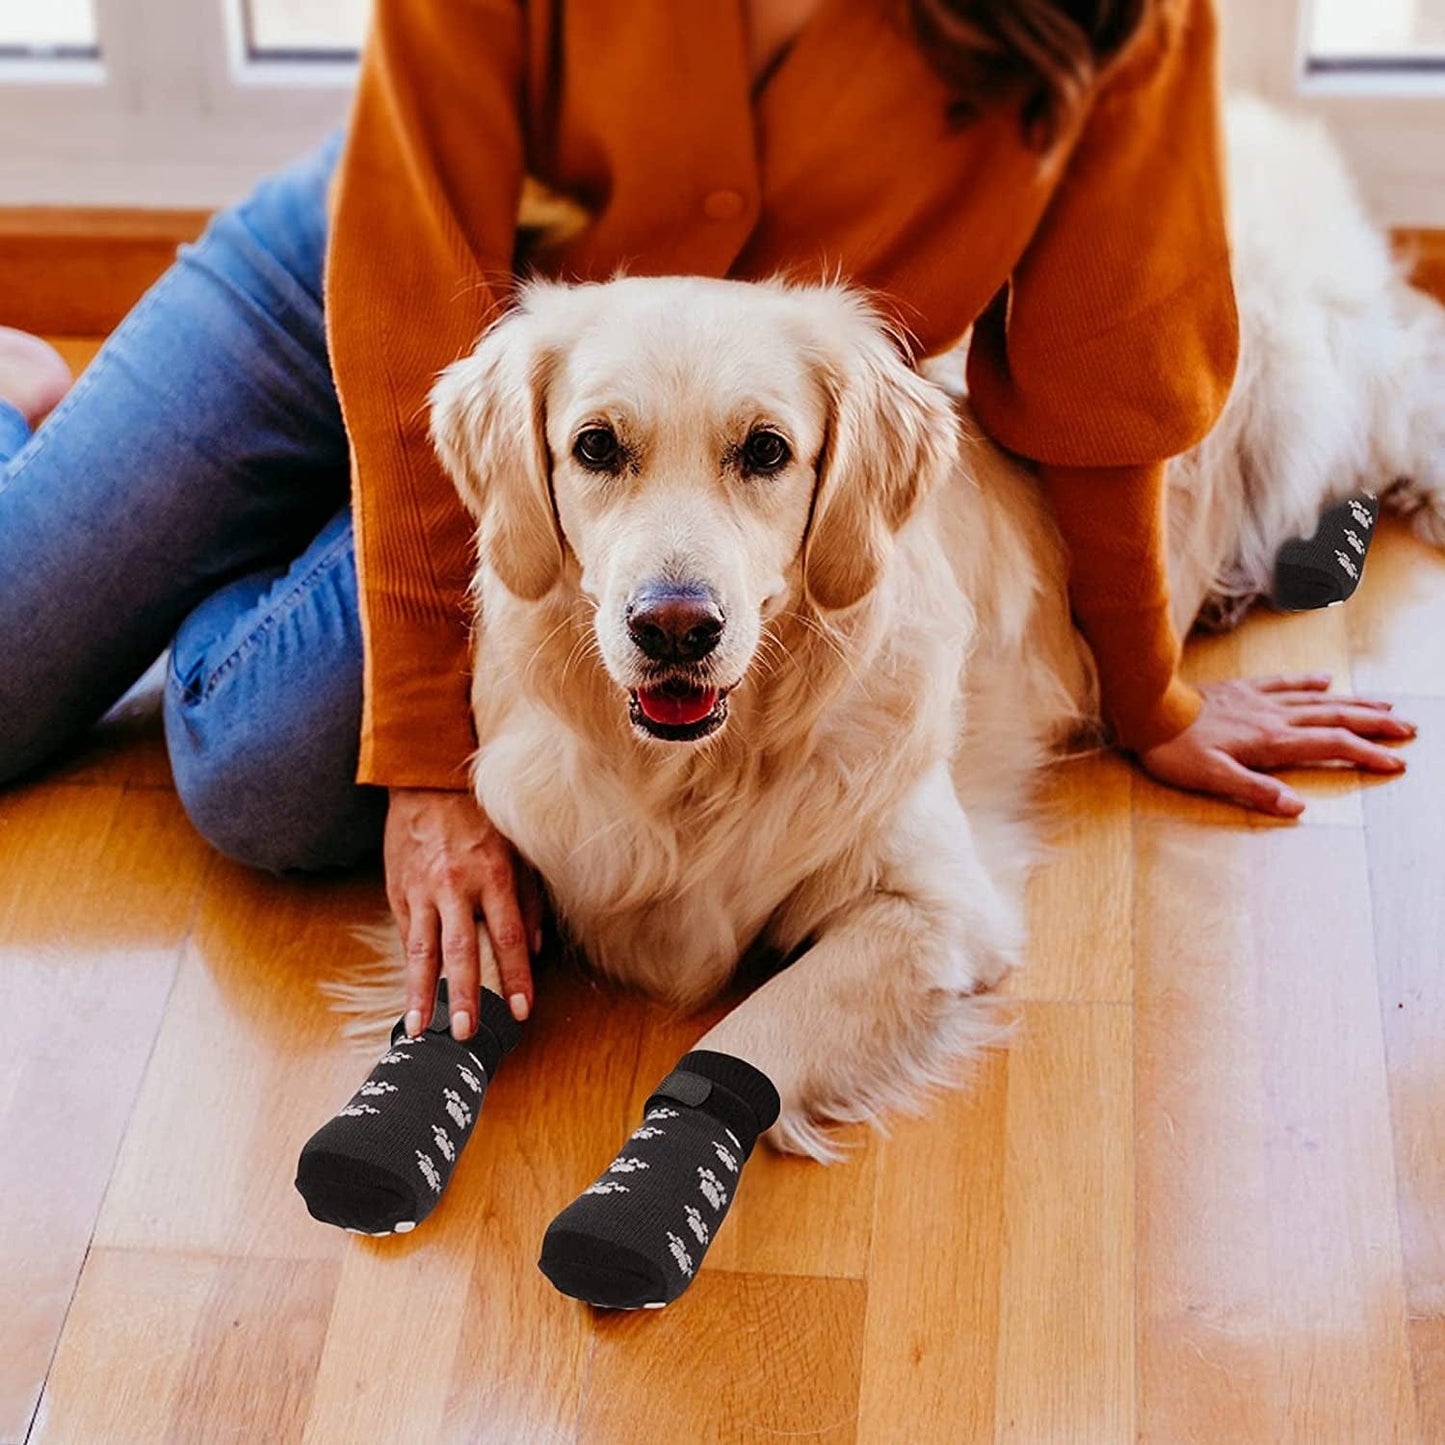 BEAUTYZOO Anti Slip Dog Socks for Hardwood Floors 